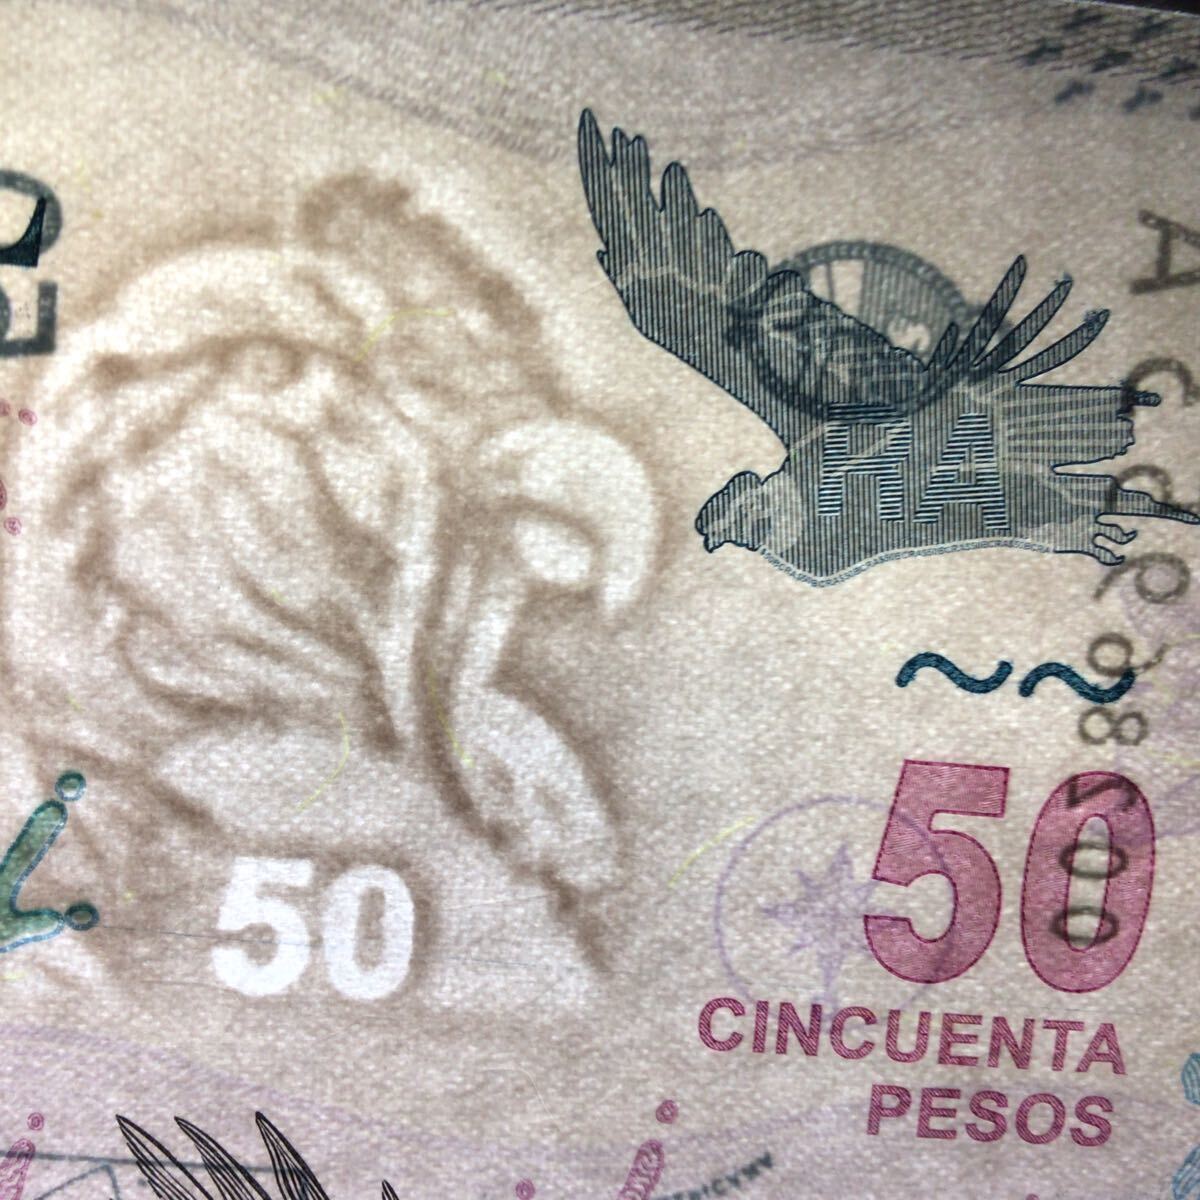 World Banknote Grading ARGENTINA《Banco Central》50 Pesos【2018】『PMG Grading Gem Uncirculated 66 EPQ』_画像3